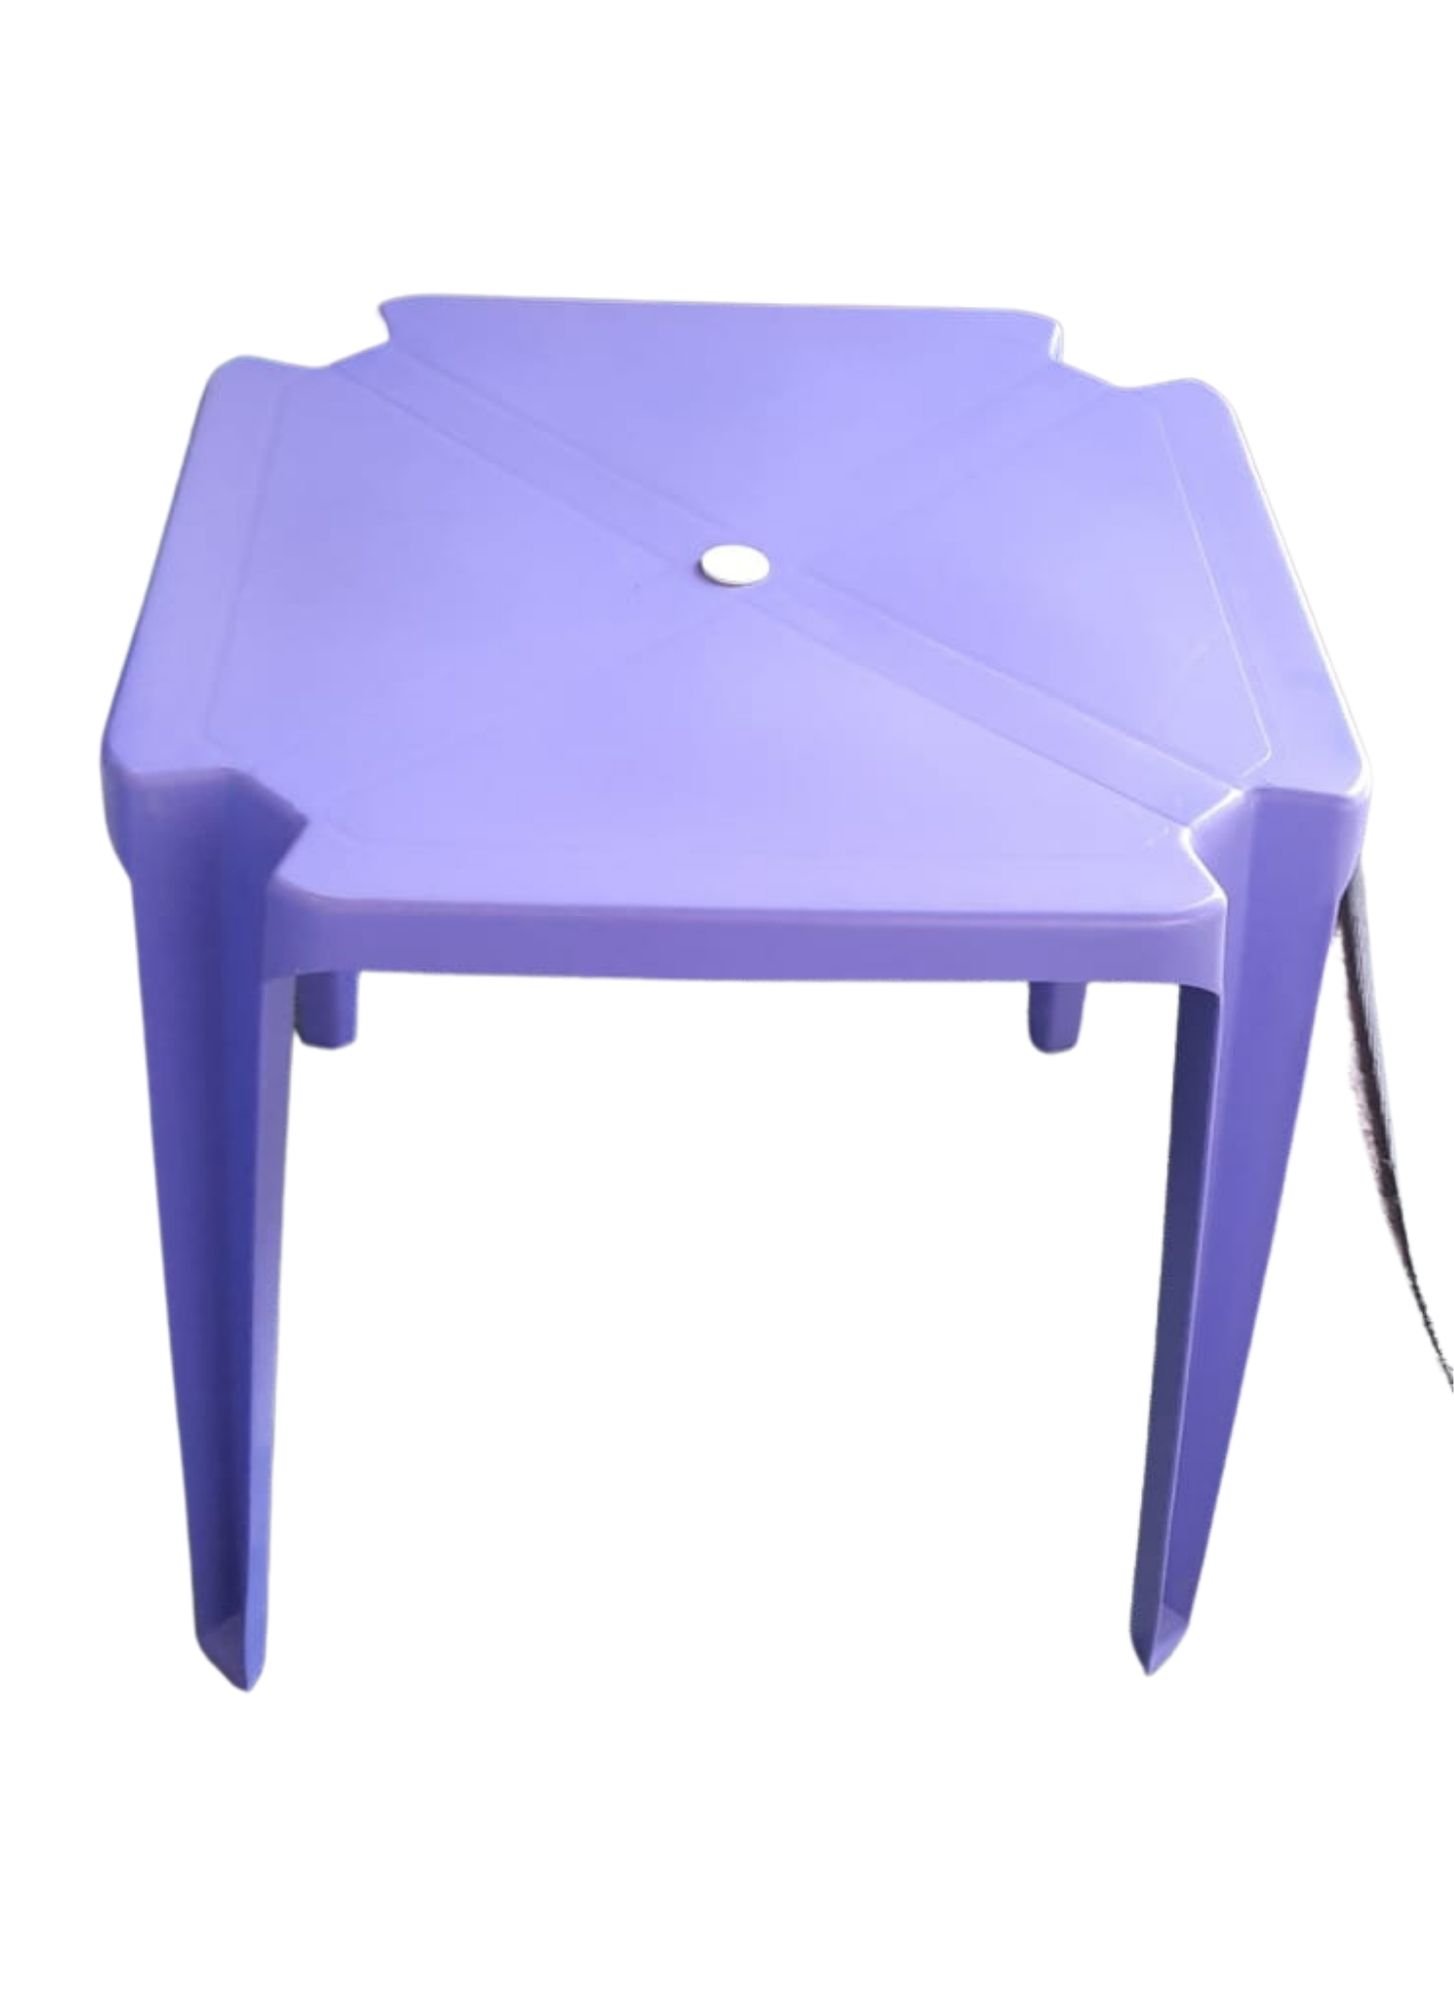 Mesa e Cadeira de Plástico Preta - Somel